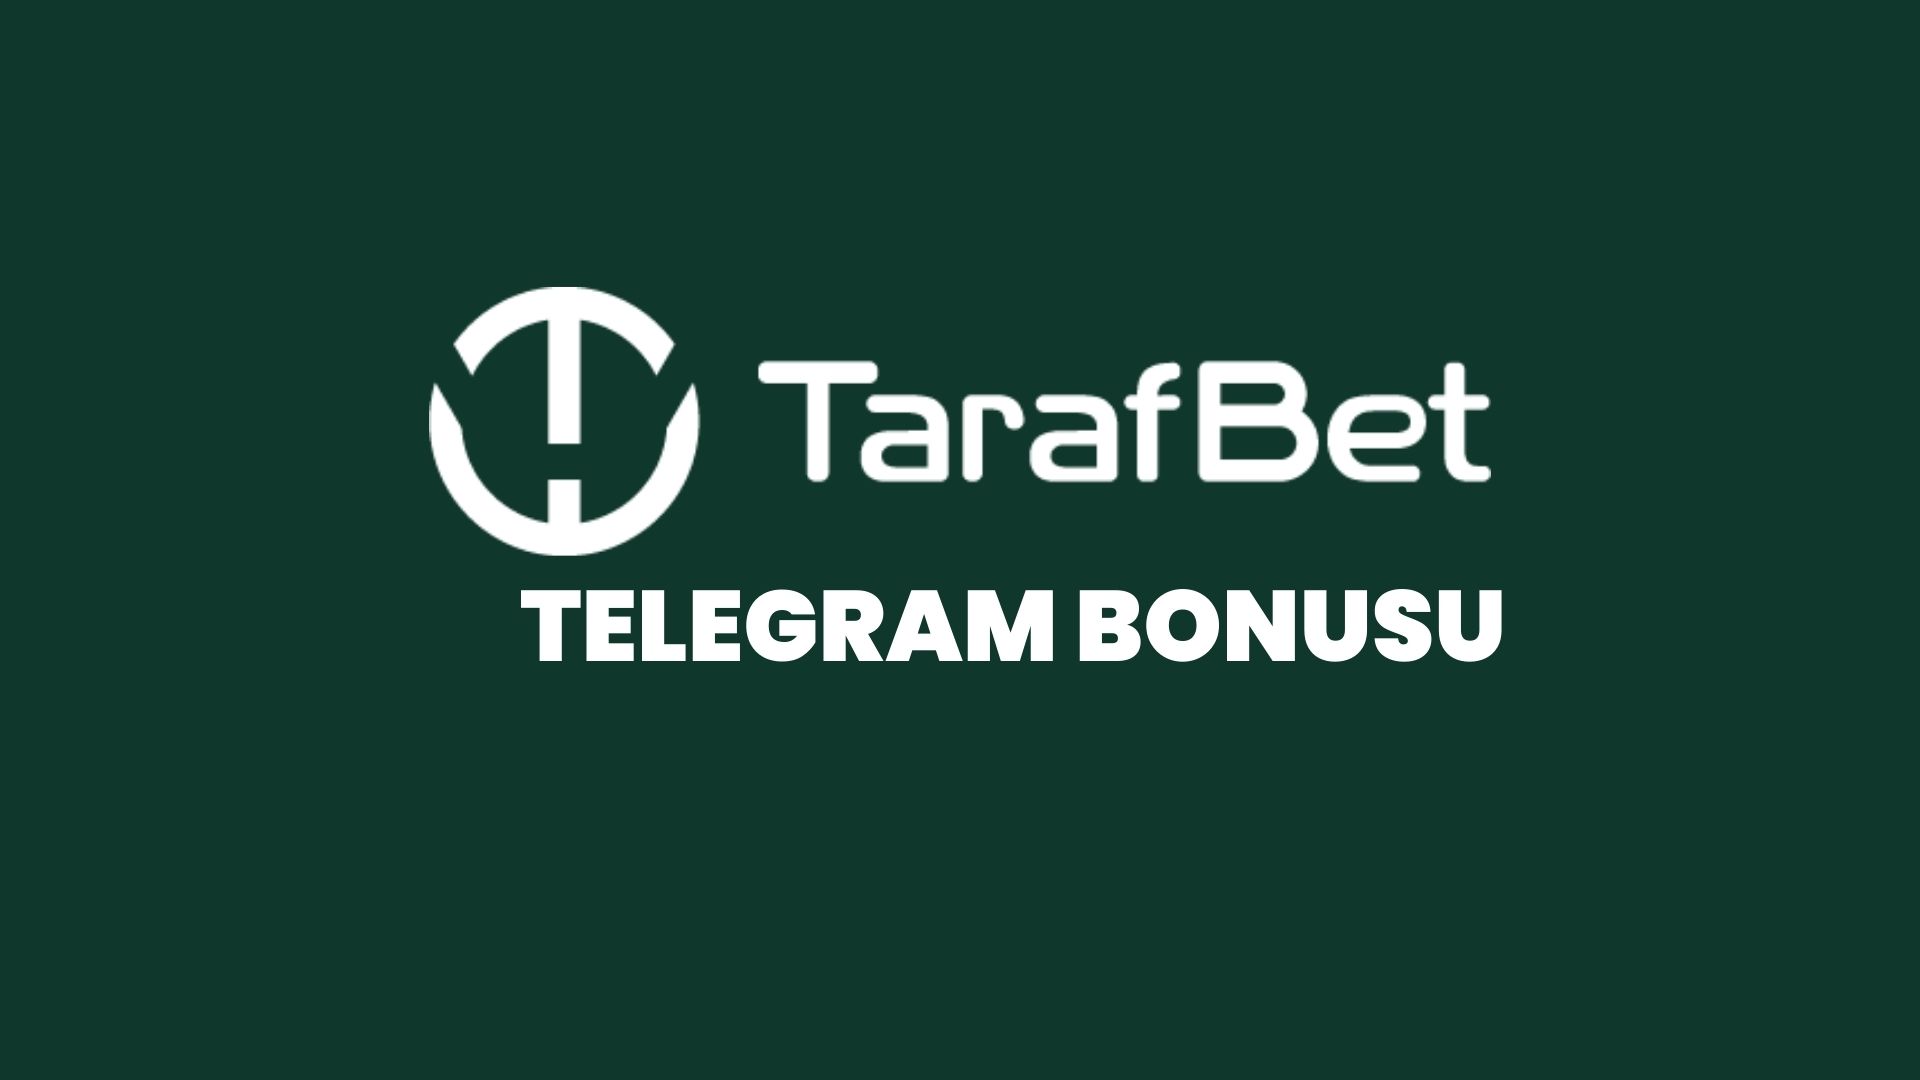 tarafbet-telegram-bonusu